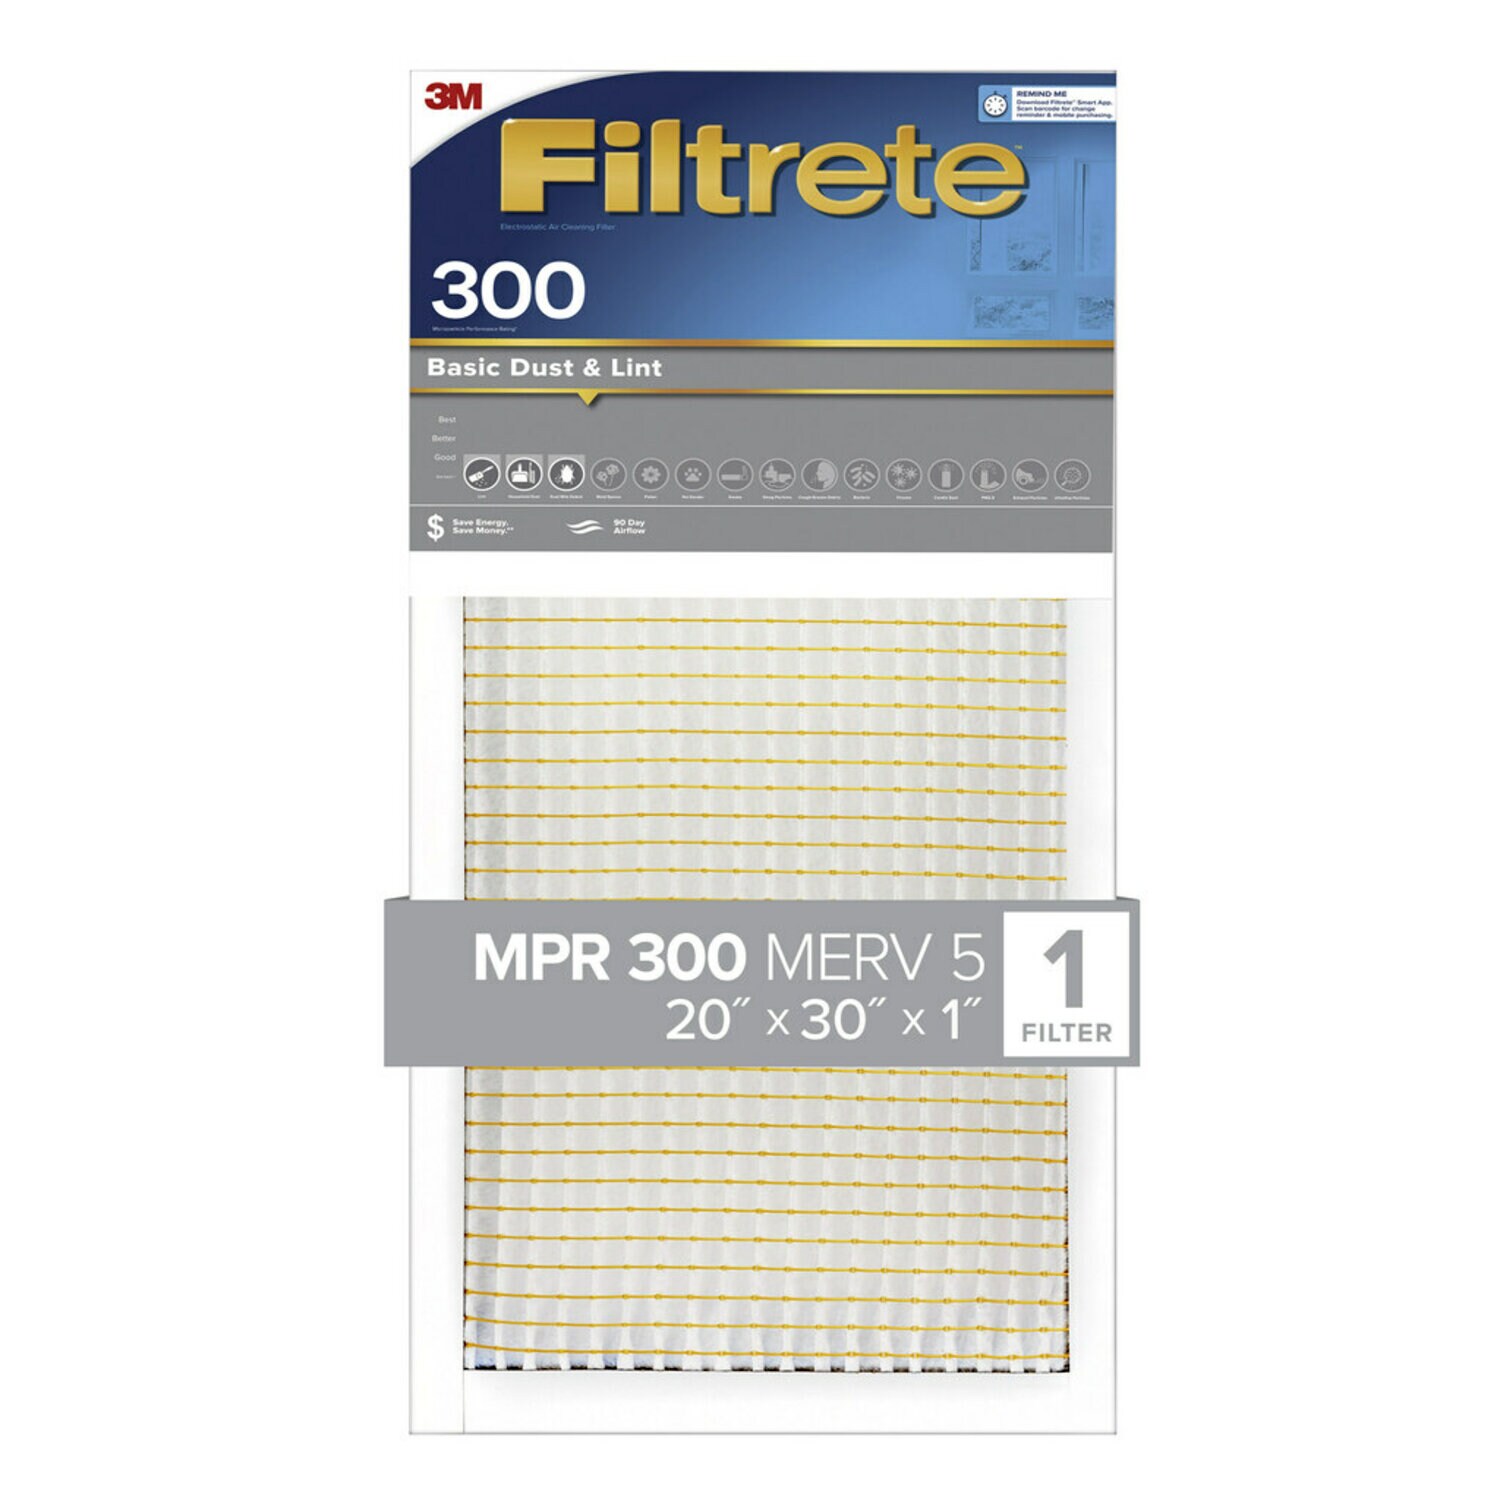 7100186819 - Filtrete Basic Dust & Lint Air Filter, 300 MPR, 322-4, 20 in x 30 in x
1 in (50.8 cm x 76.2 cm x 2.5 cm)